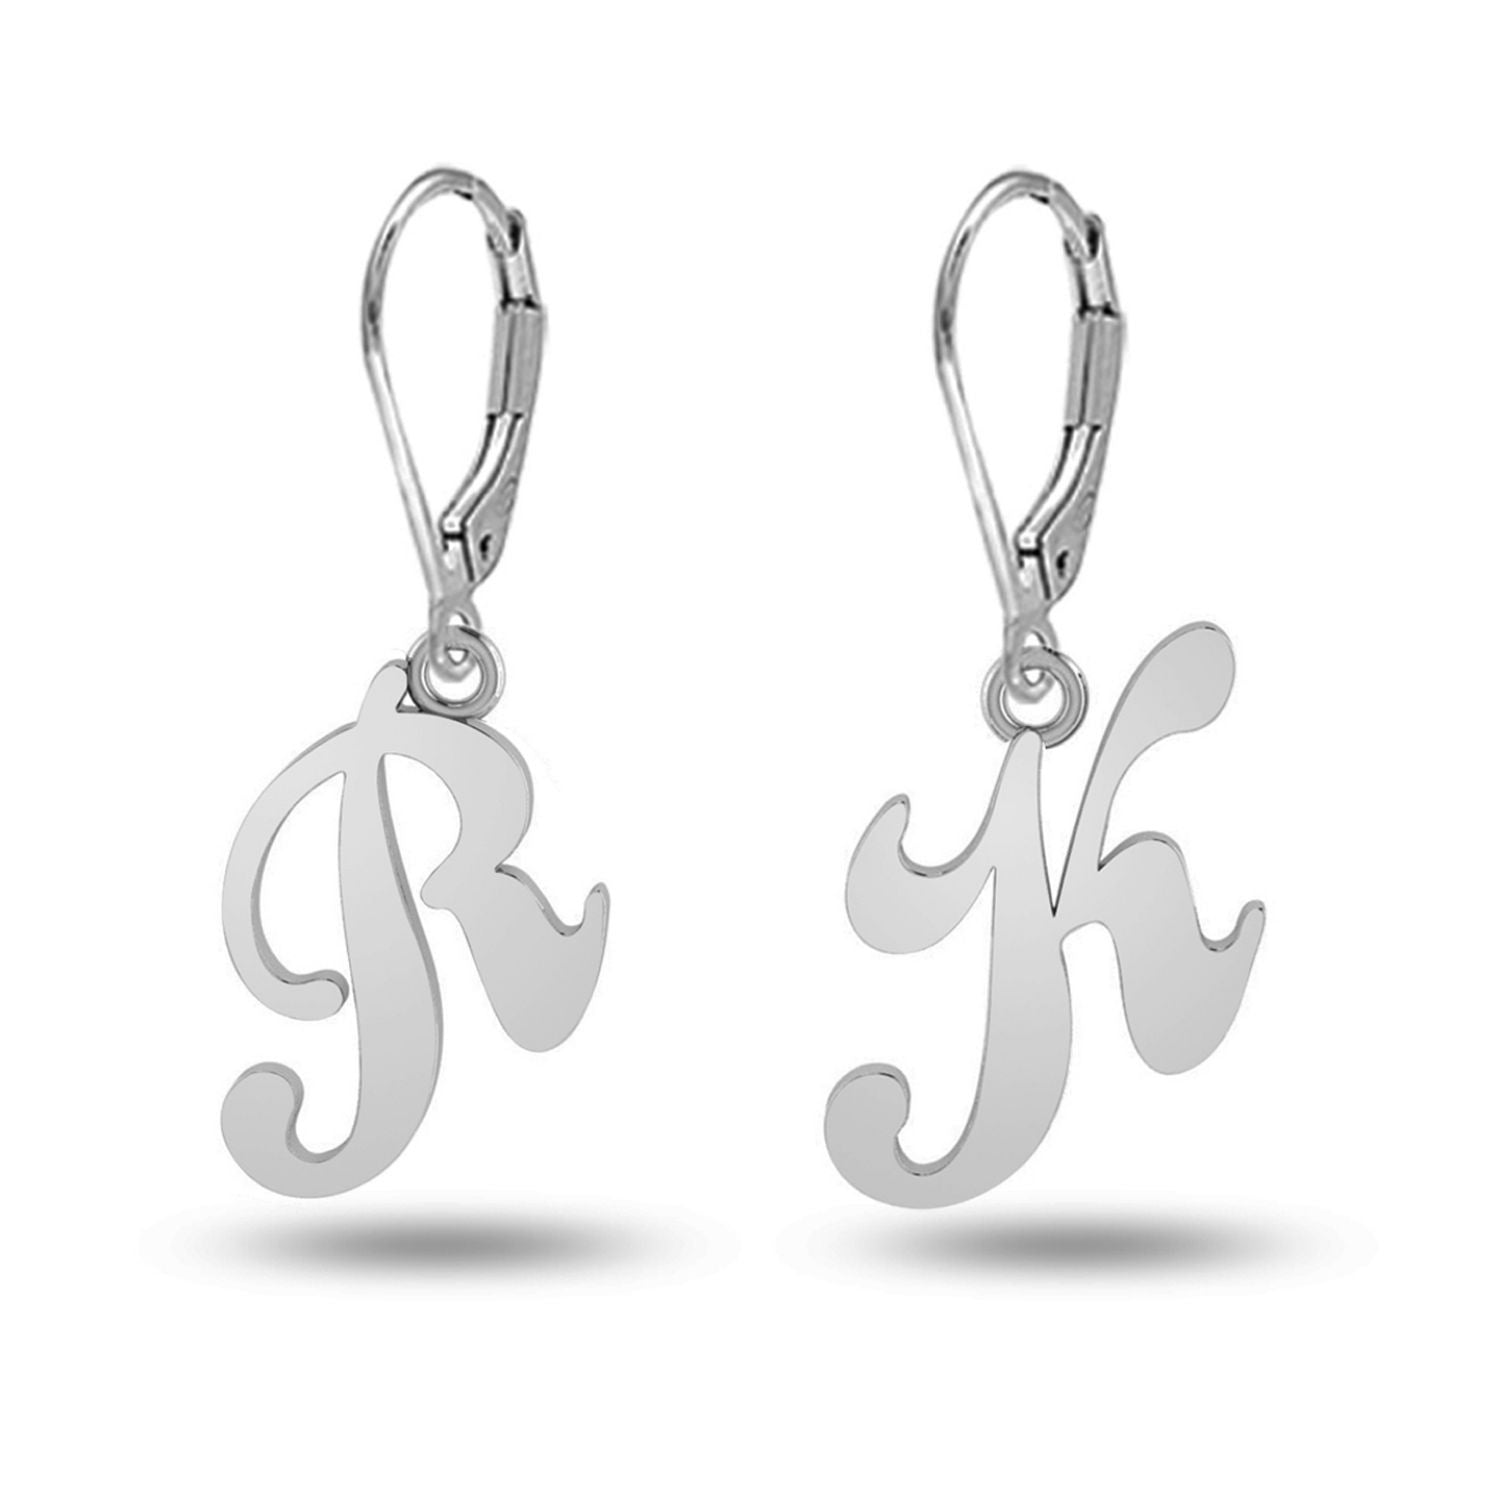 Personalised 925 Sterling Silver Initial Alphabet Earrings for Teen Women